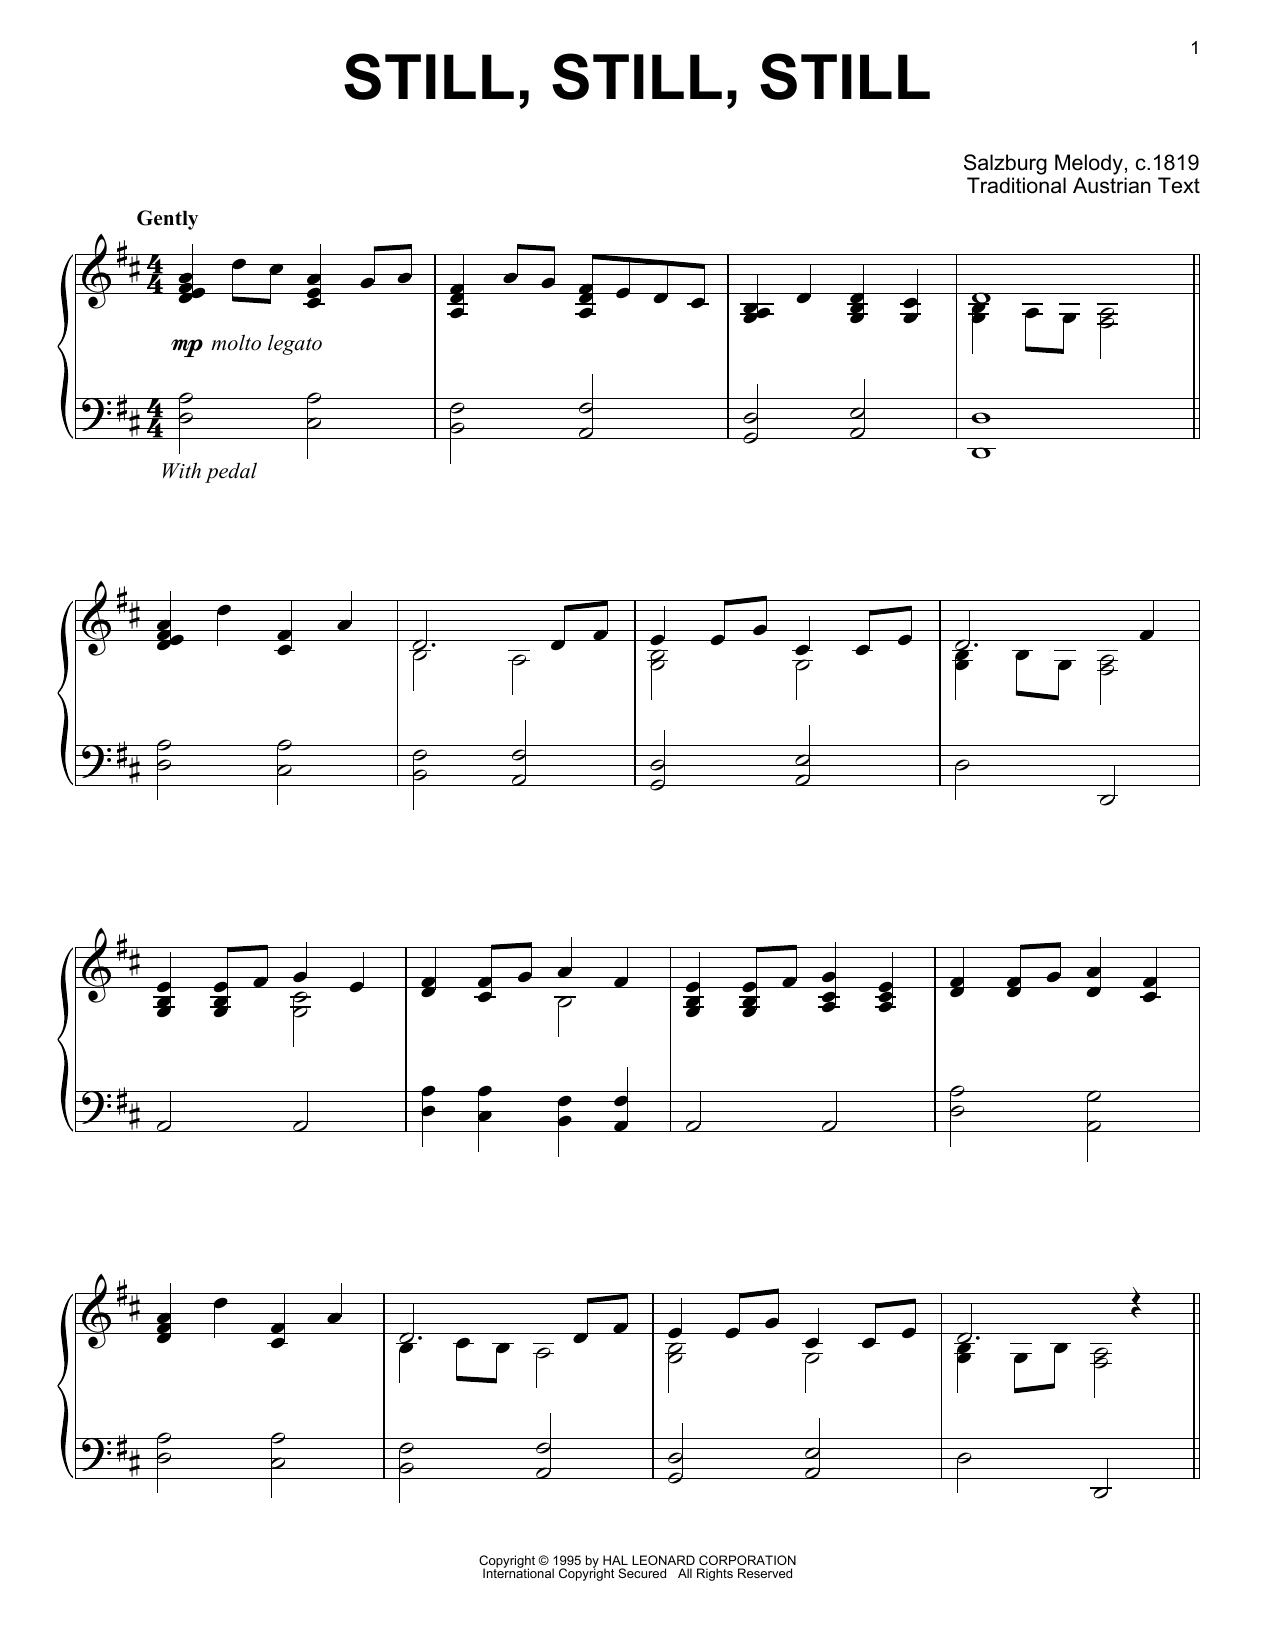 Traditional Austrian Text Still, Still, Still Sheet Music Notes & Chords for Ukulele with strumming patterns - Download or Print PDF